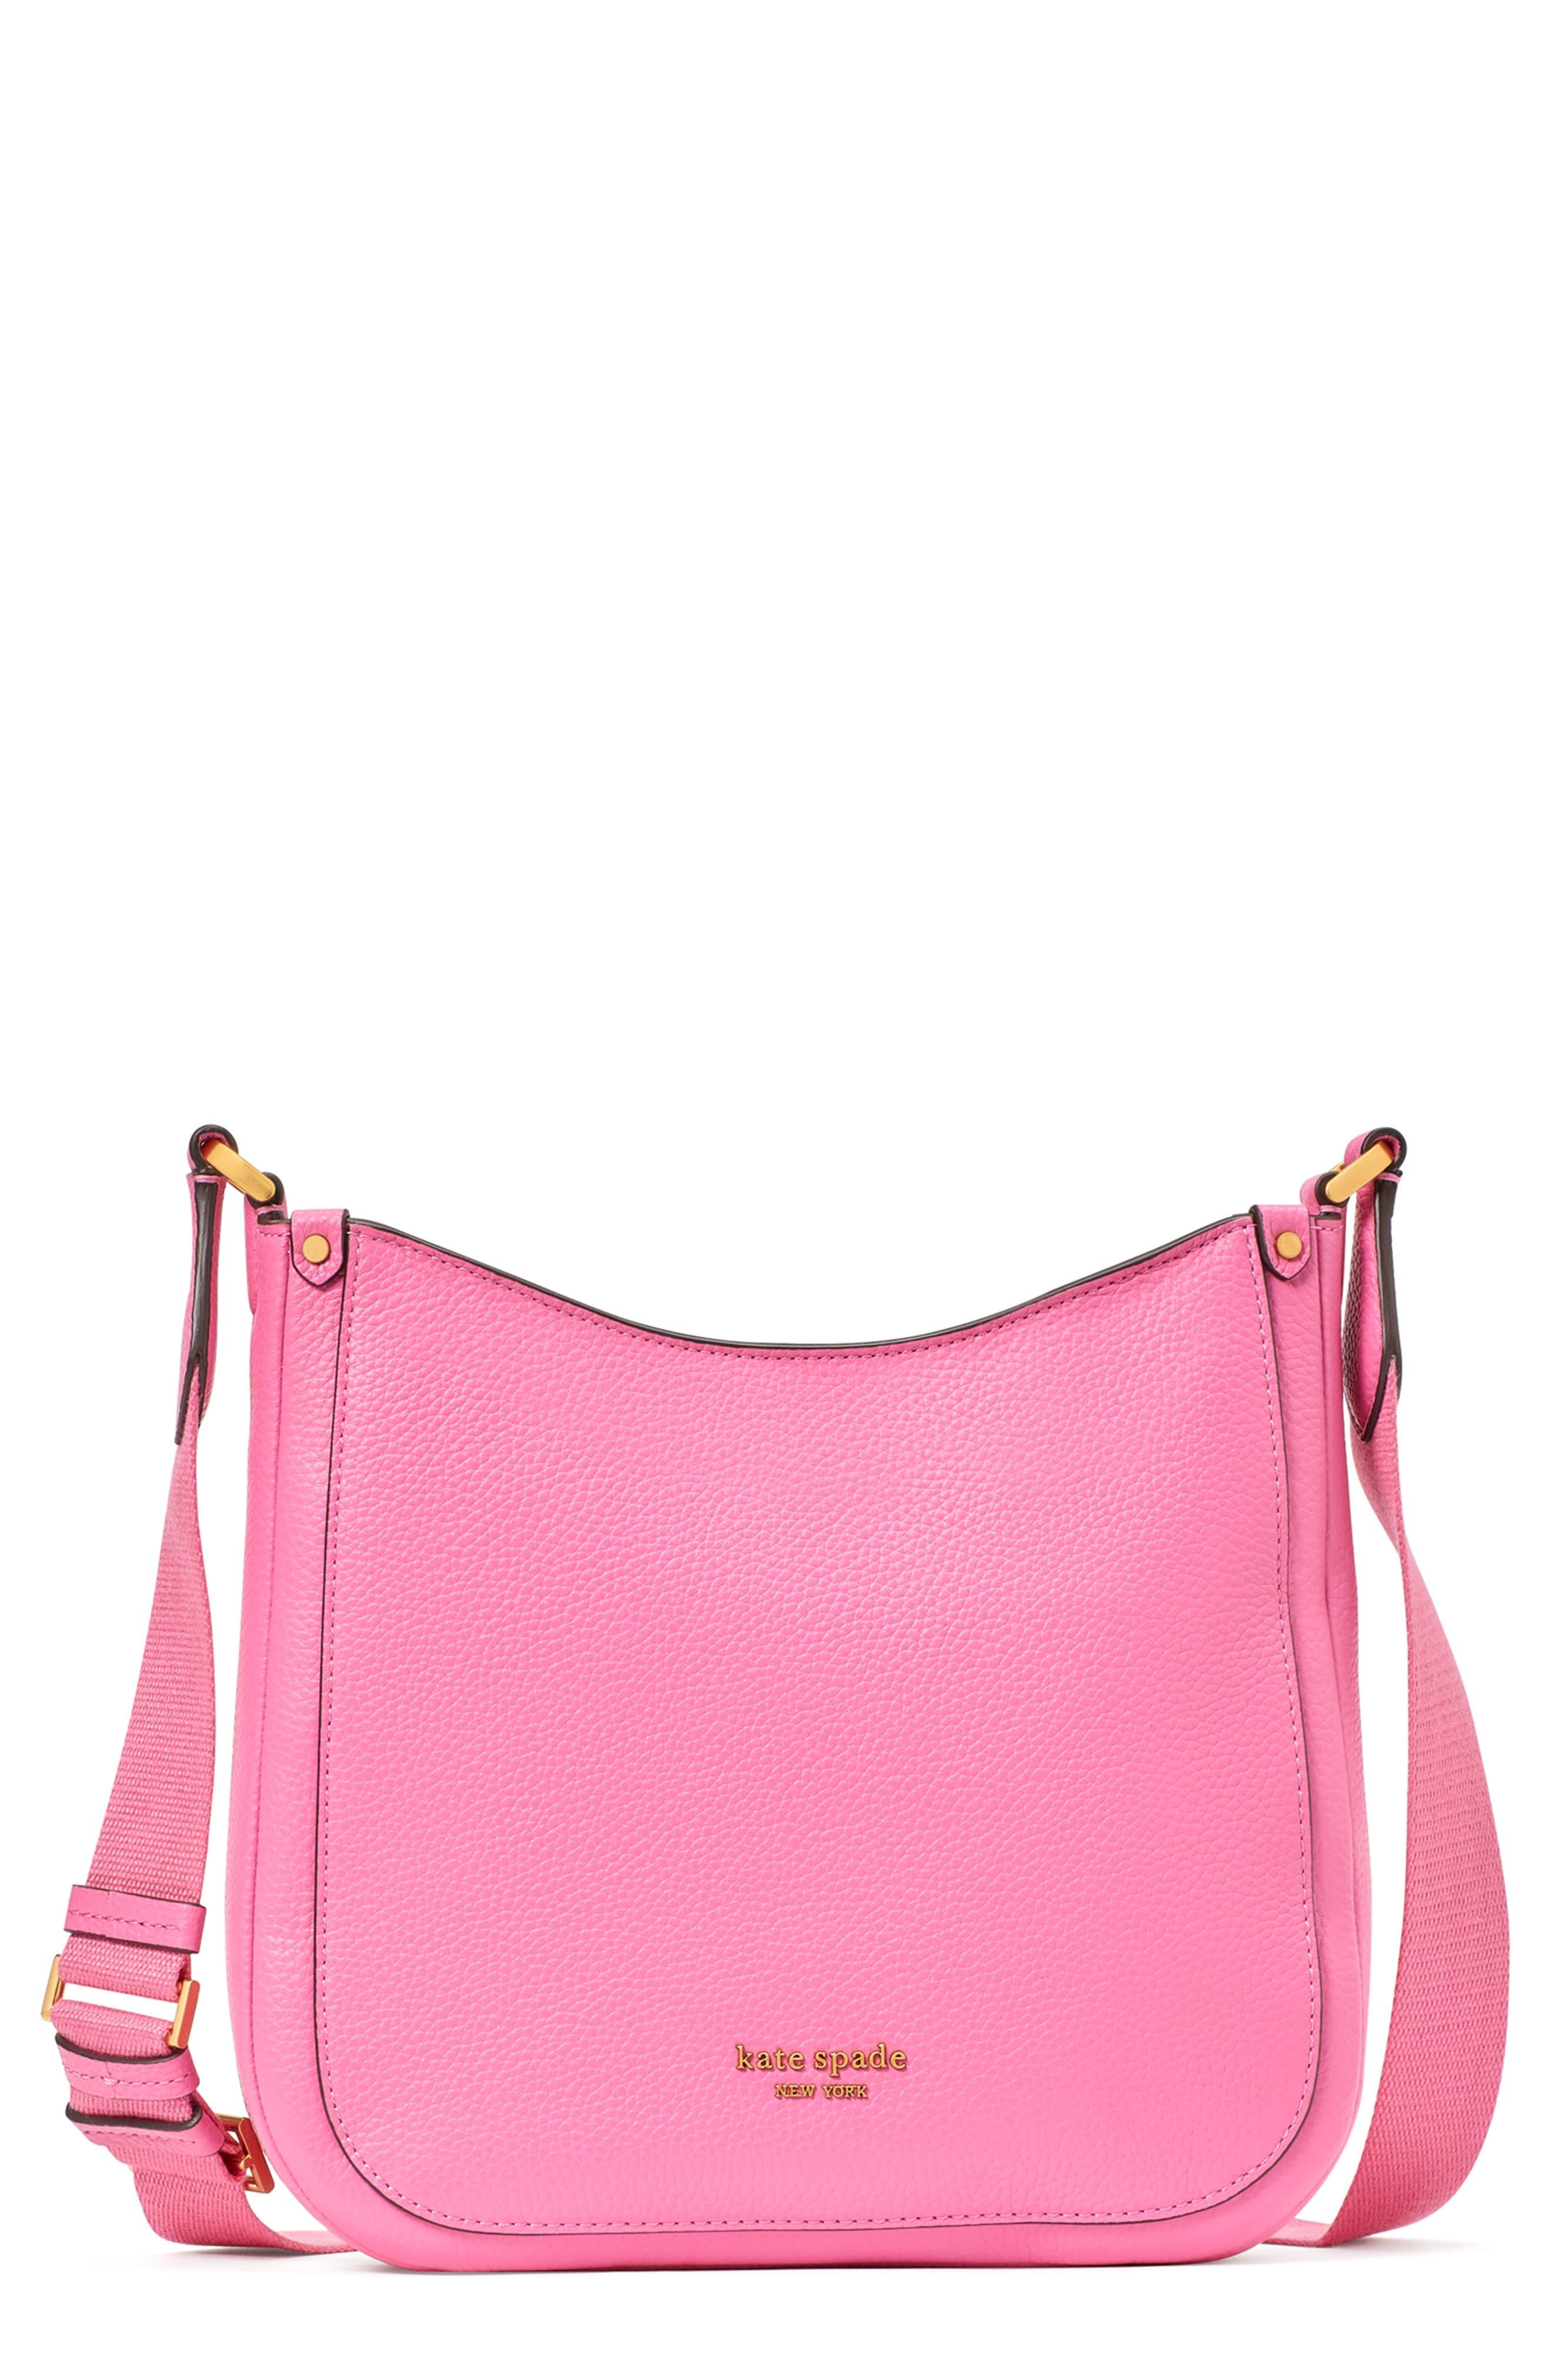 Kate Spade Medium Roulette Pebble Leather Crossbody Bag in Pink